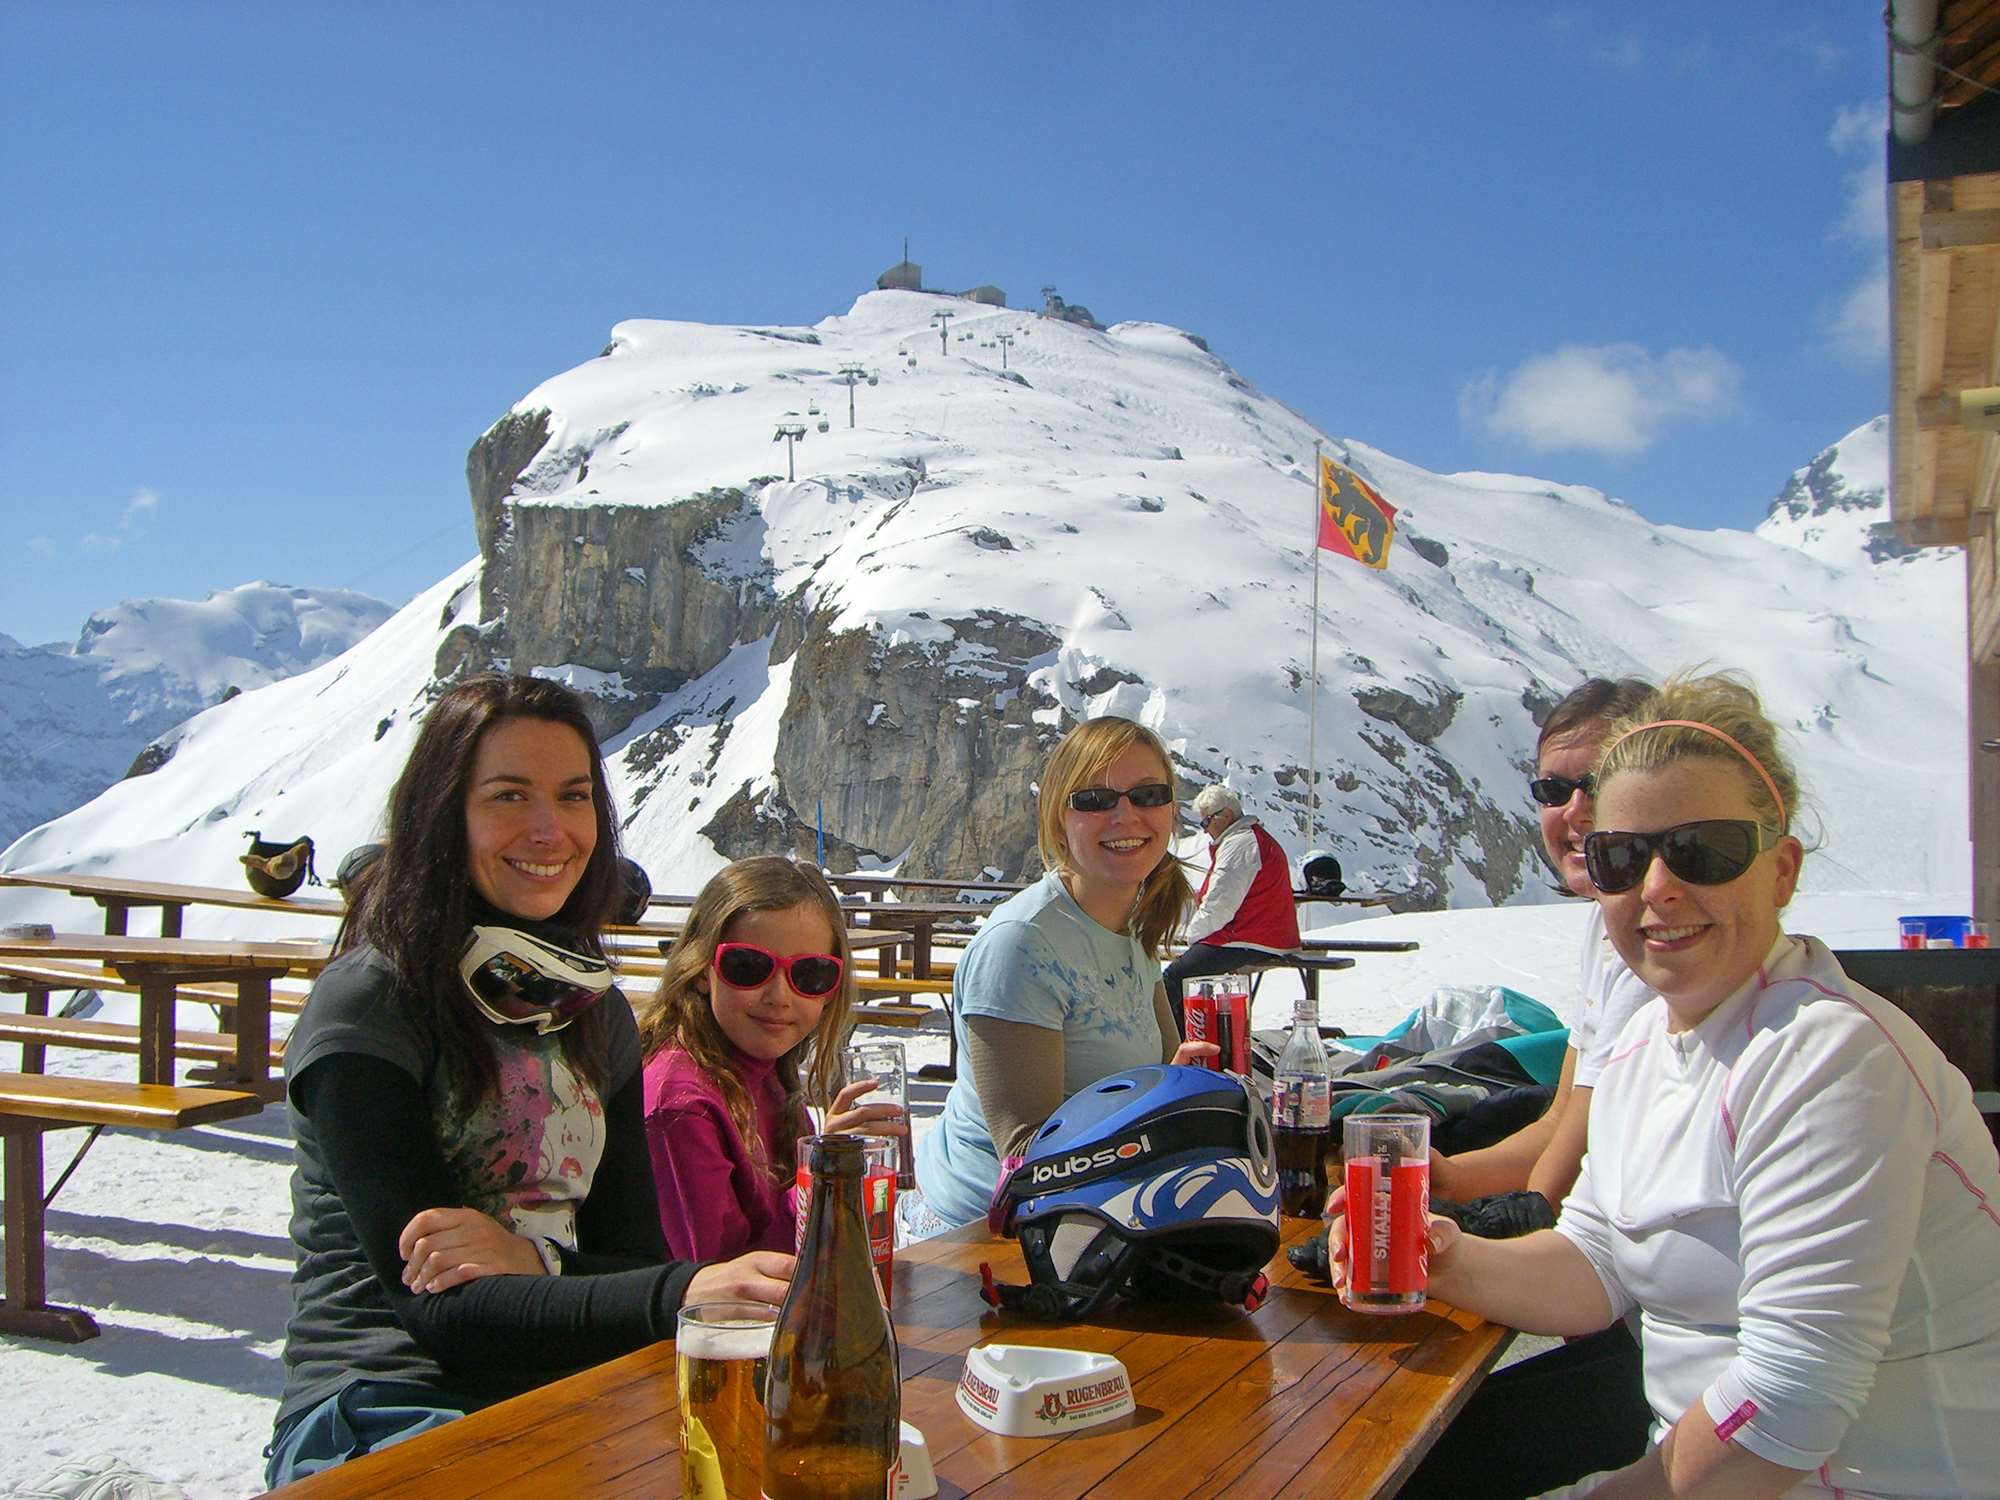 Eating on the mountain above Lauterbrunnen